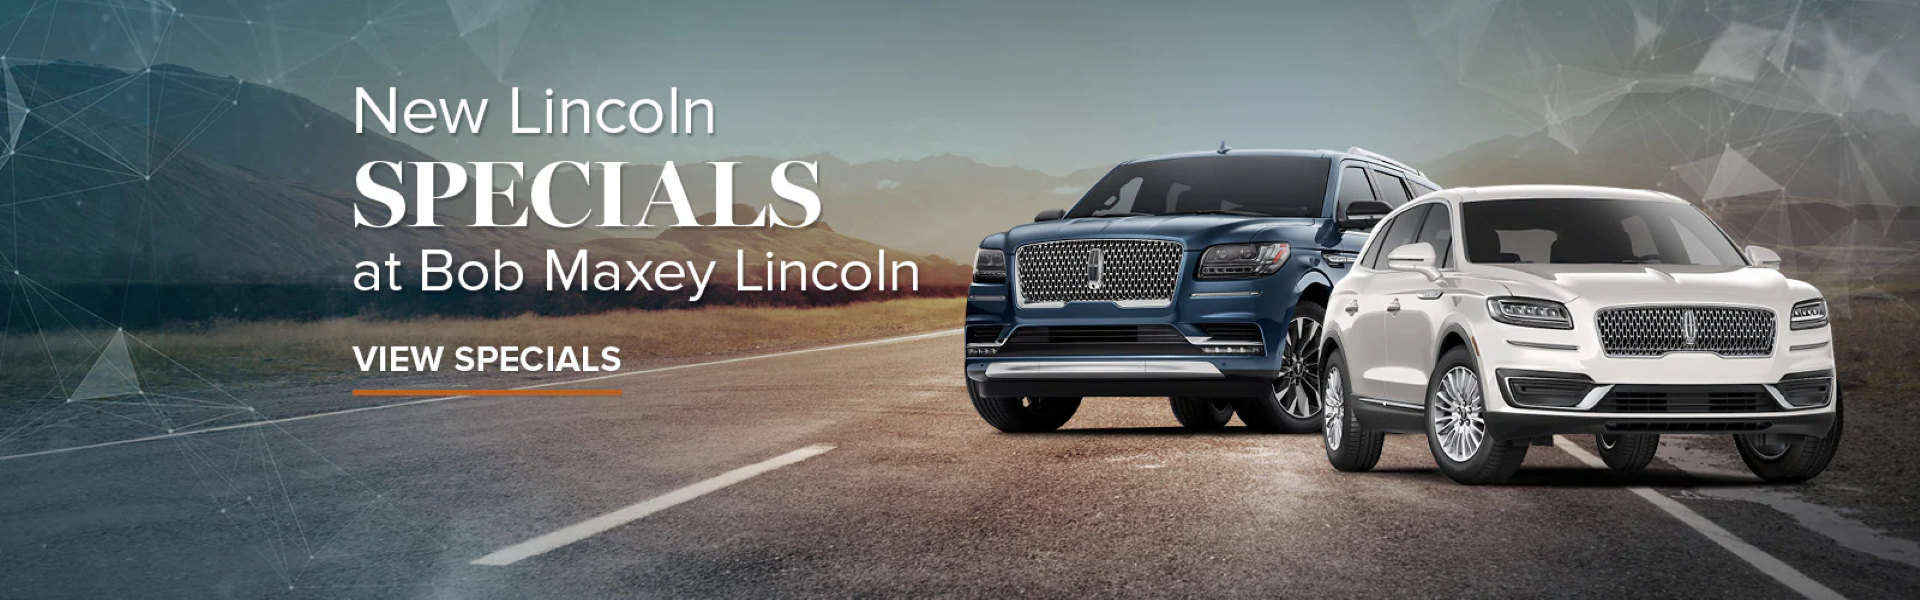 New Lincoln Specials at Bob Maxey Lincoln